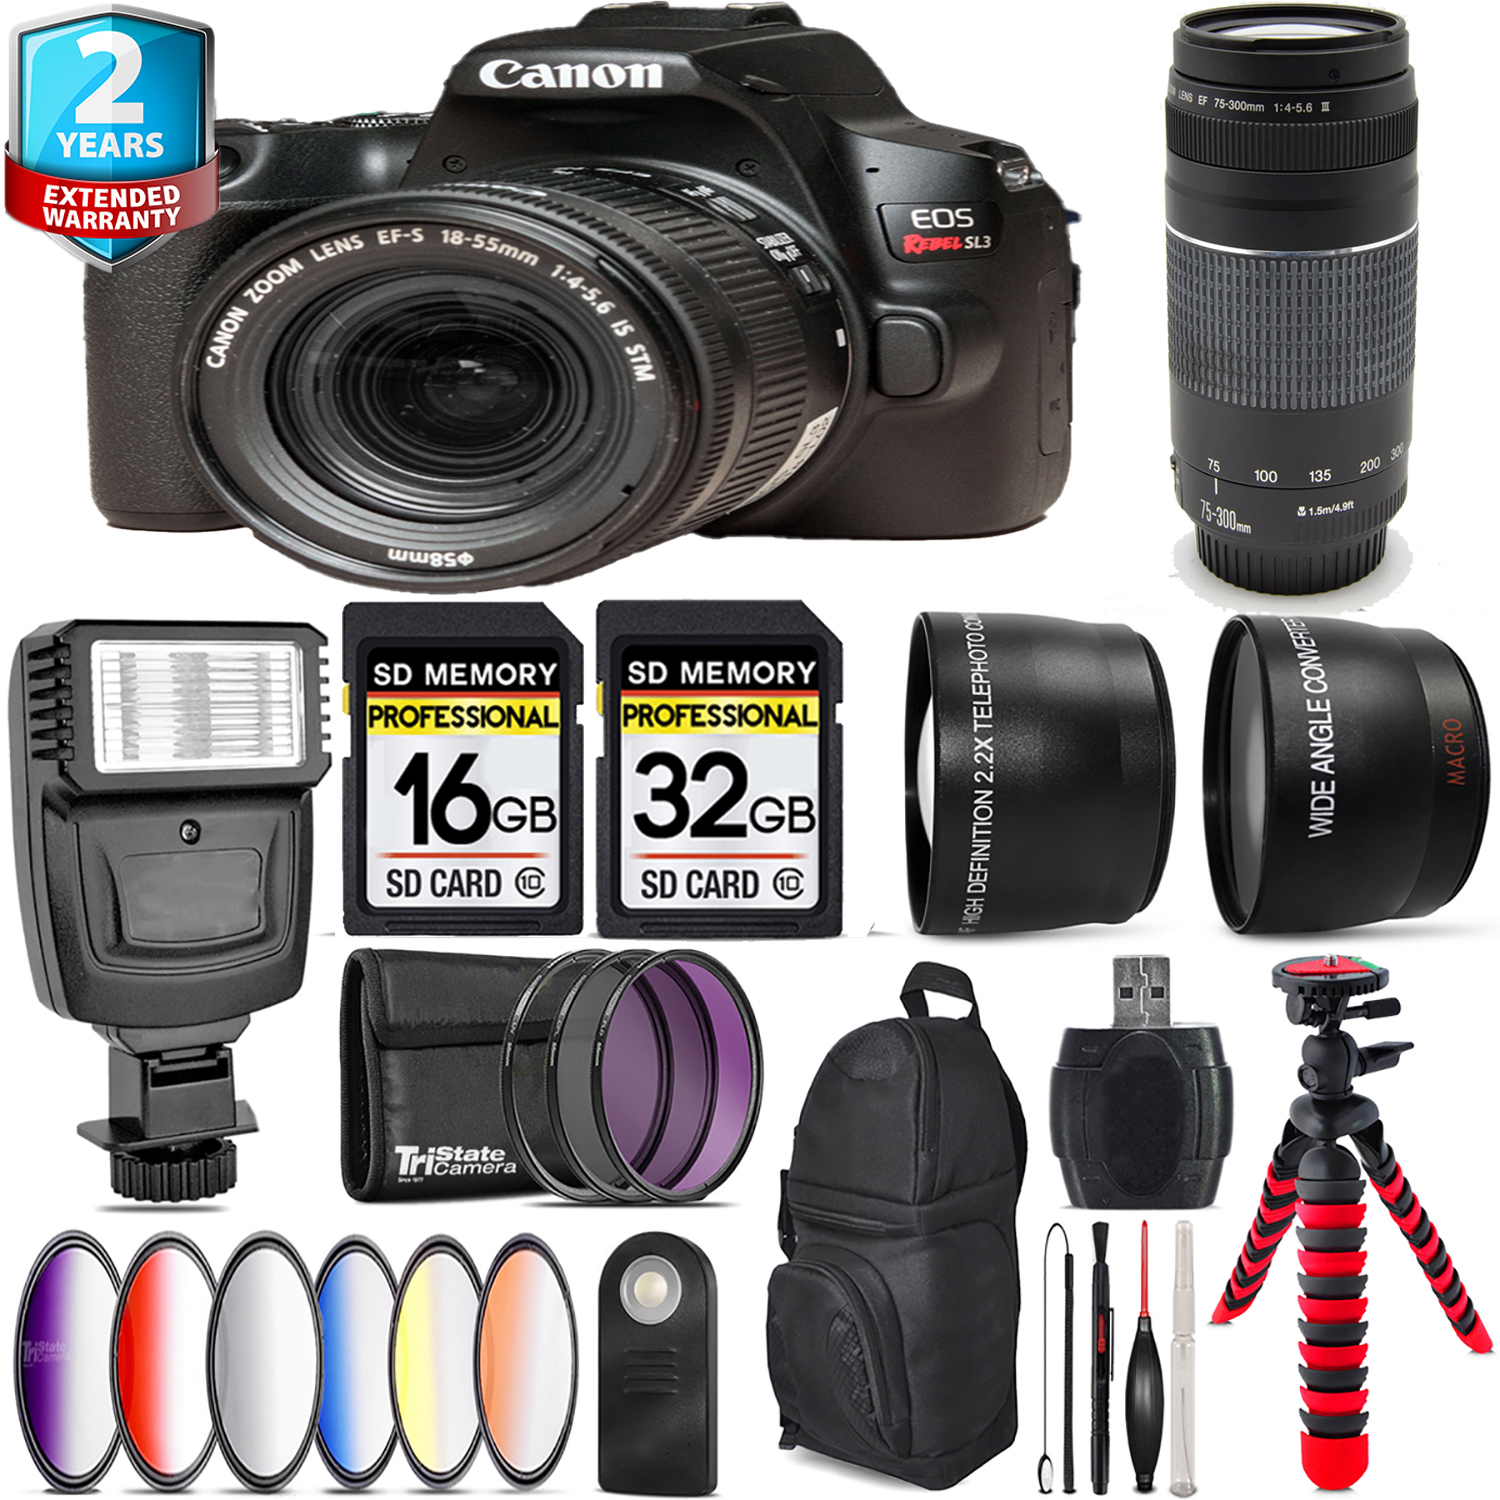 EOS Rebel SL3 Camera (Black) + 18-55mm IS STM + 75- 300mm III + Flash - 48GB *FREE SHIPPING*